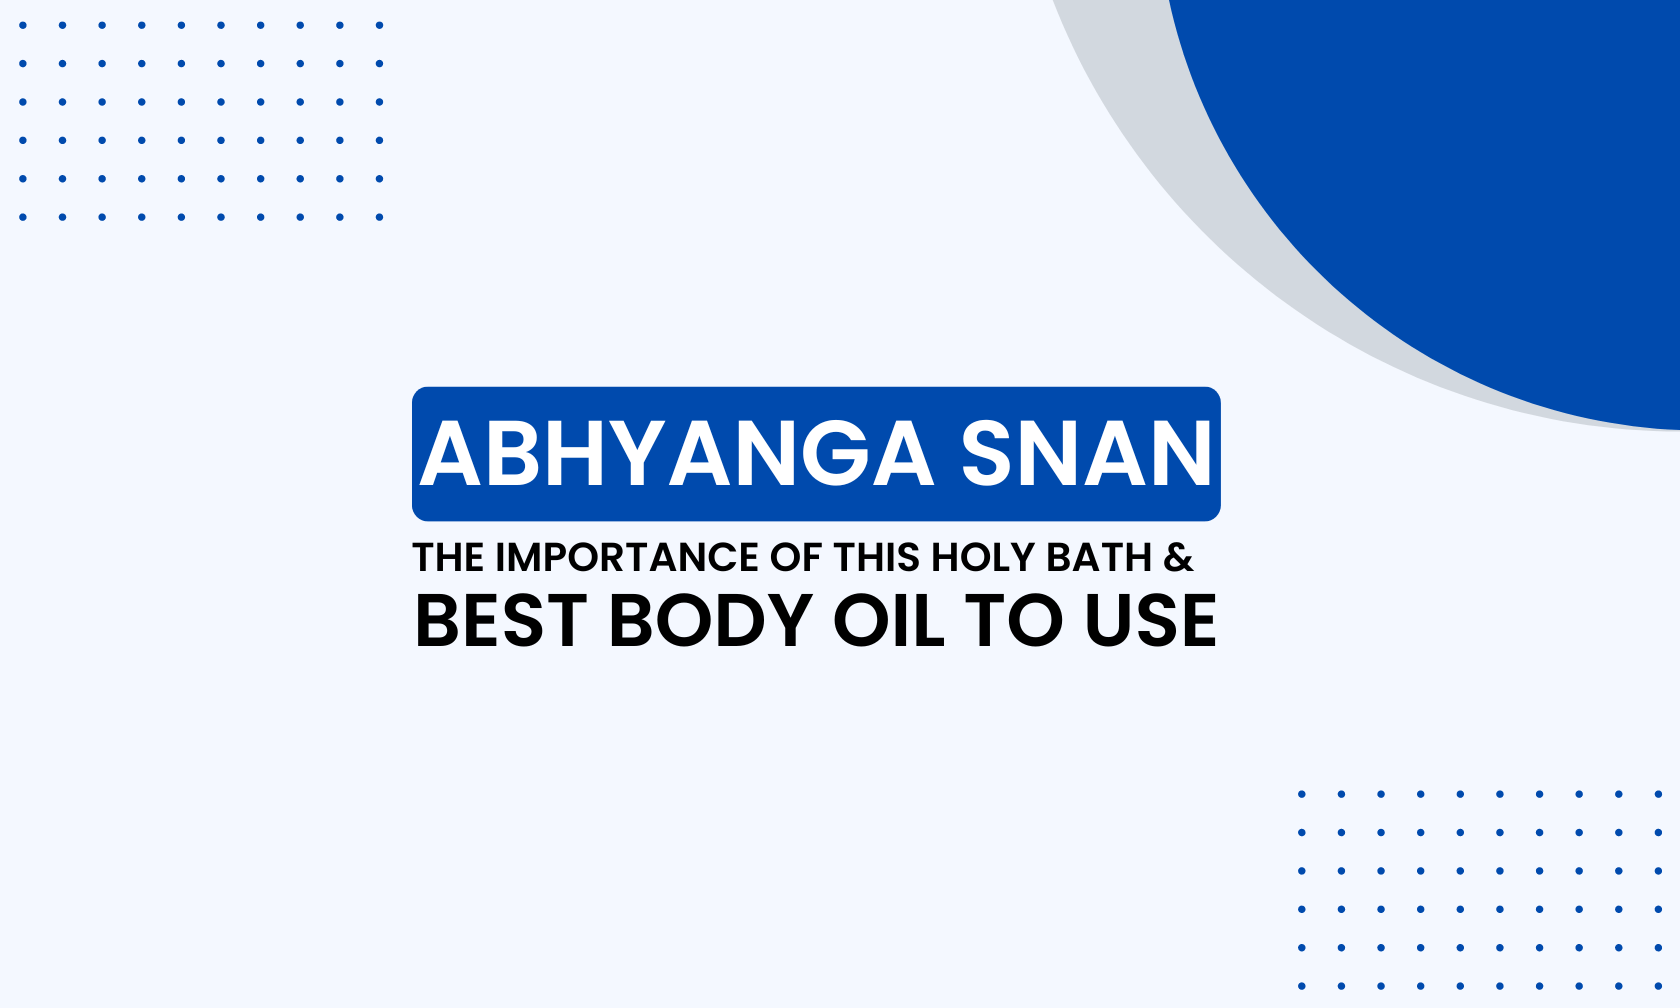 Abhyanga Snan Oil